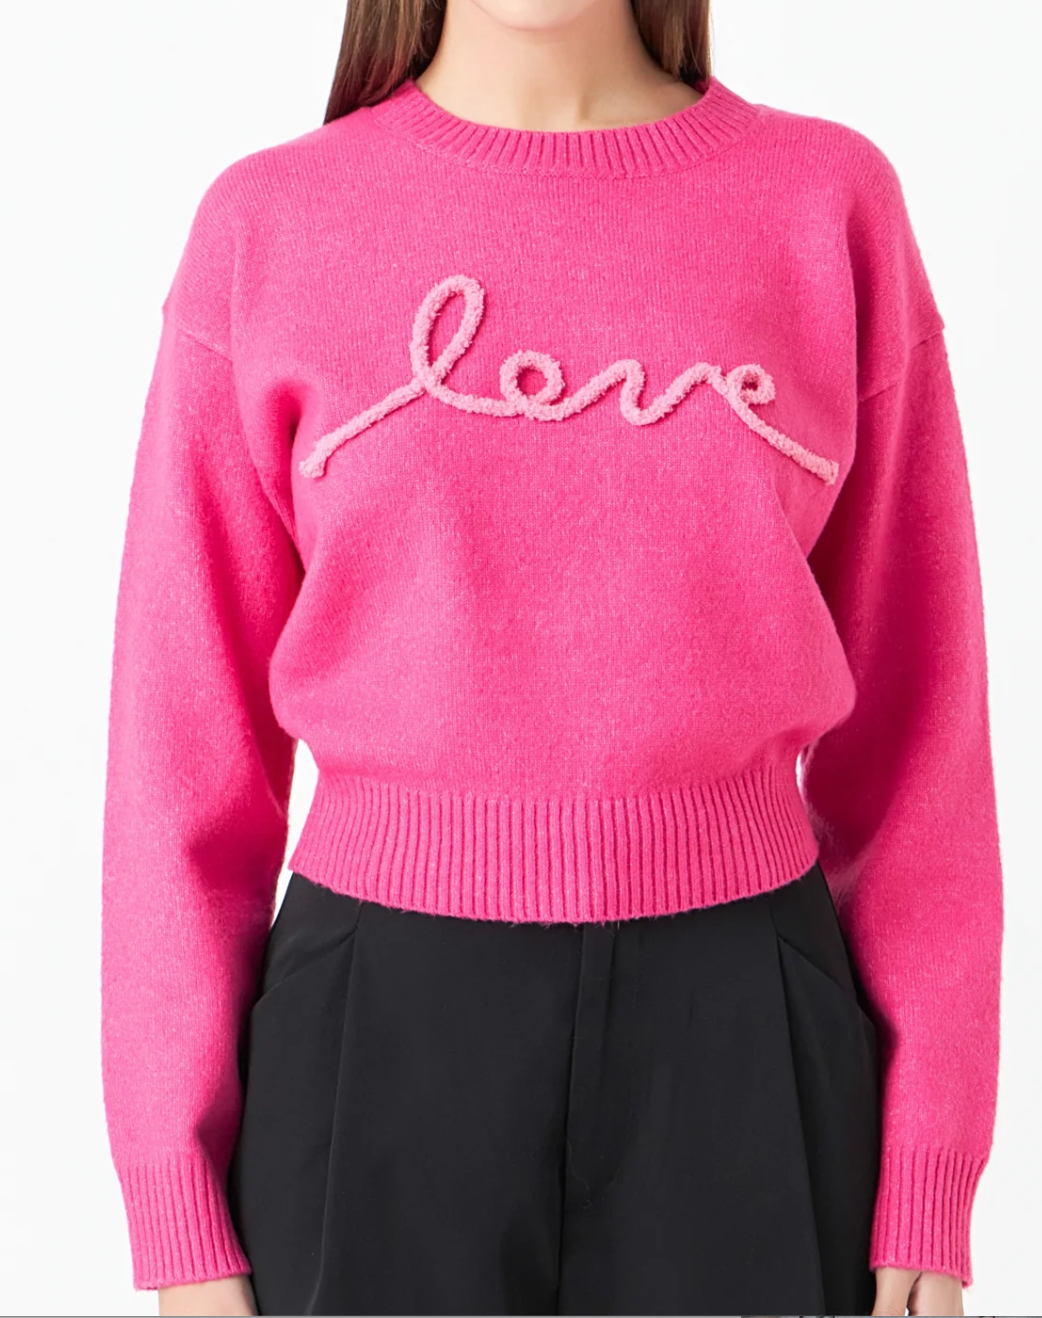 Love Plush Sweater